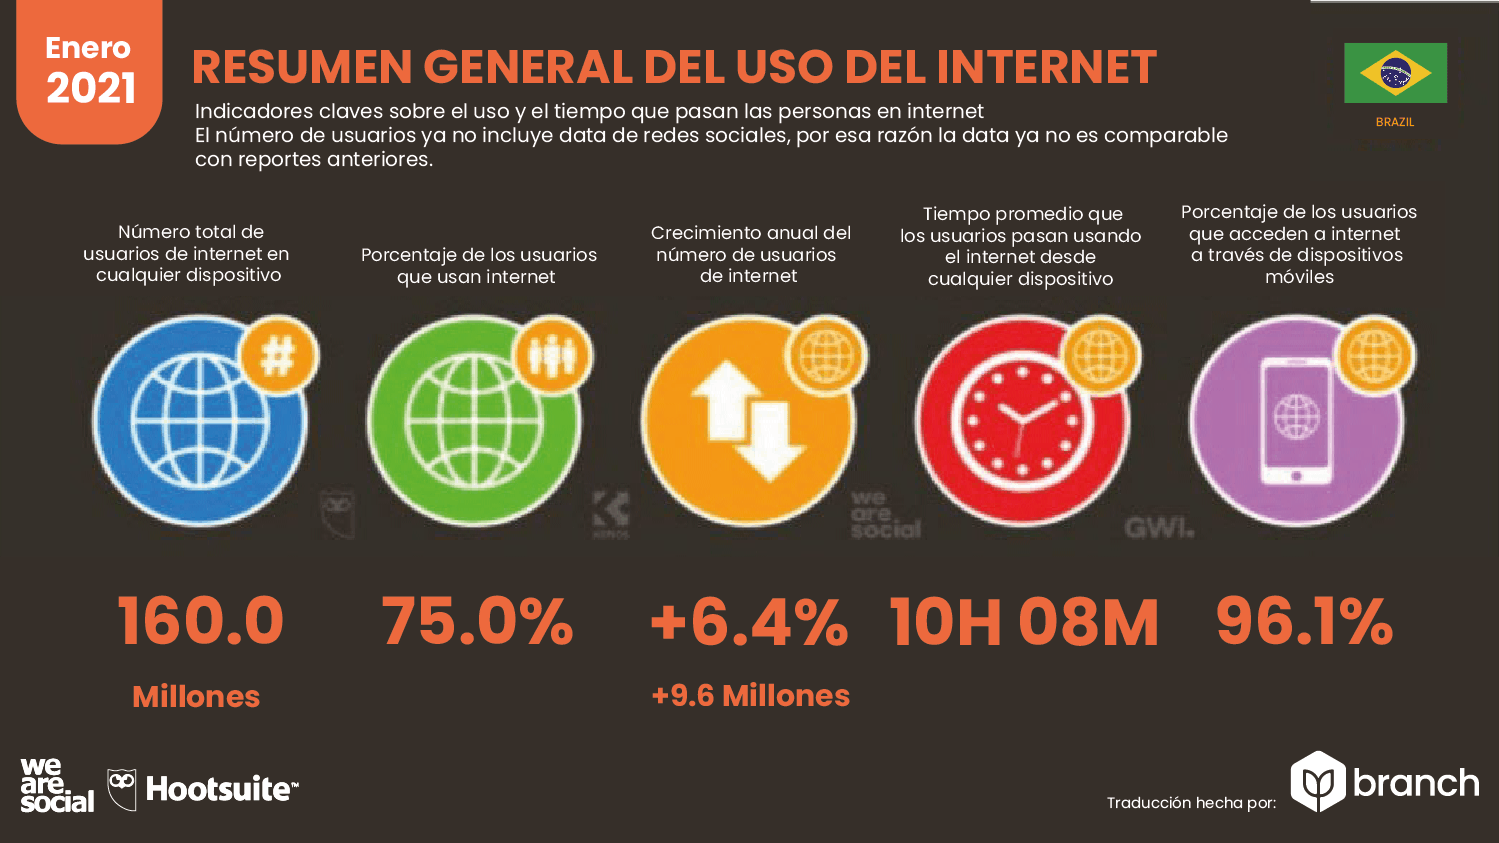 resumen-general-del-uso-de-internet-en-brasil-2020-2021